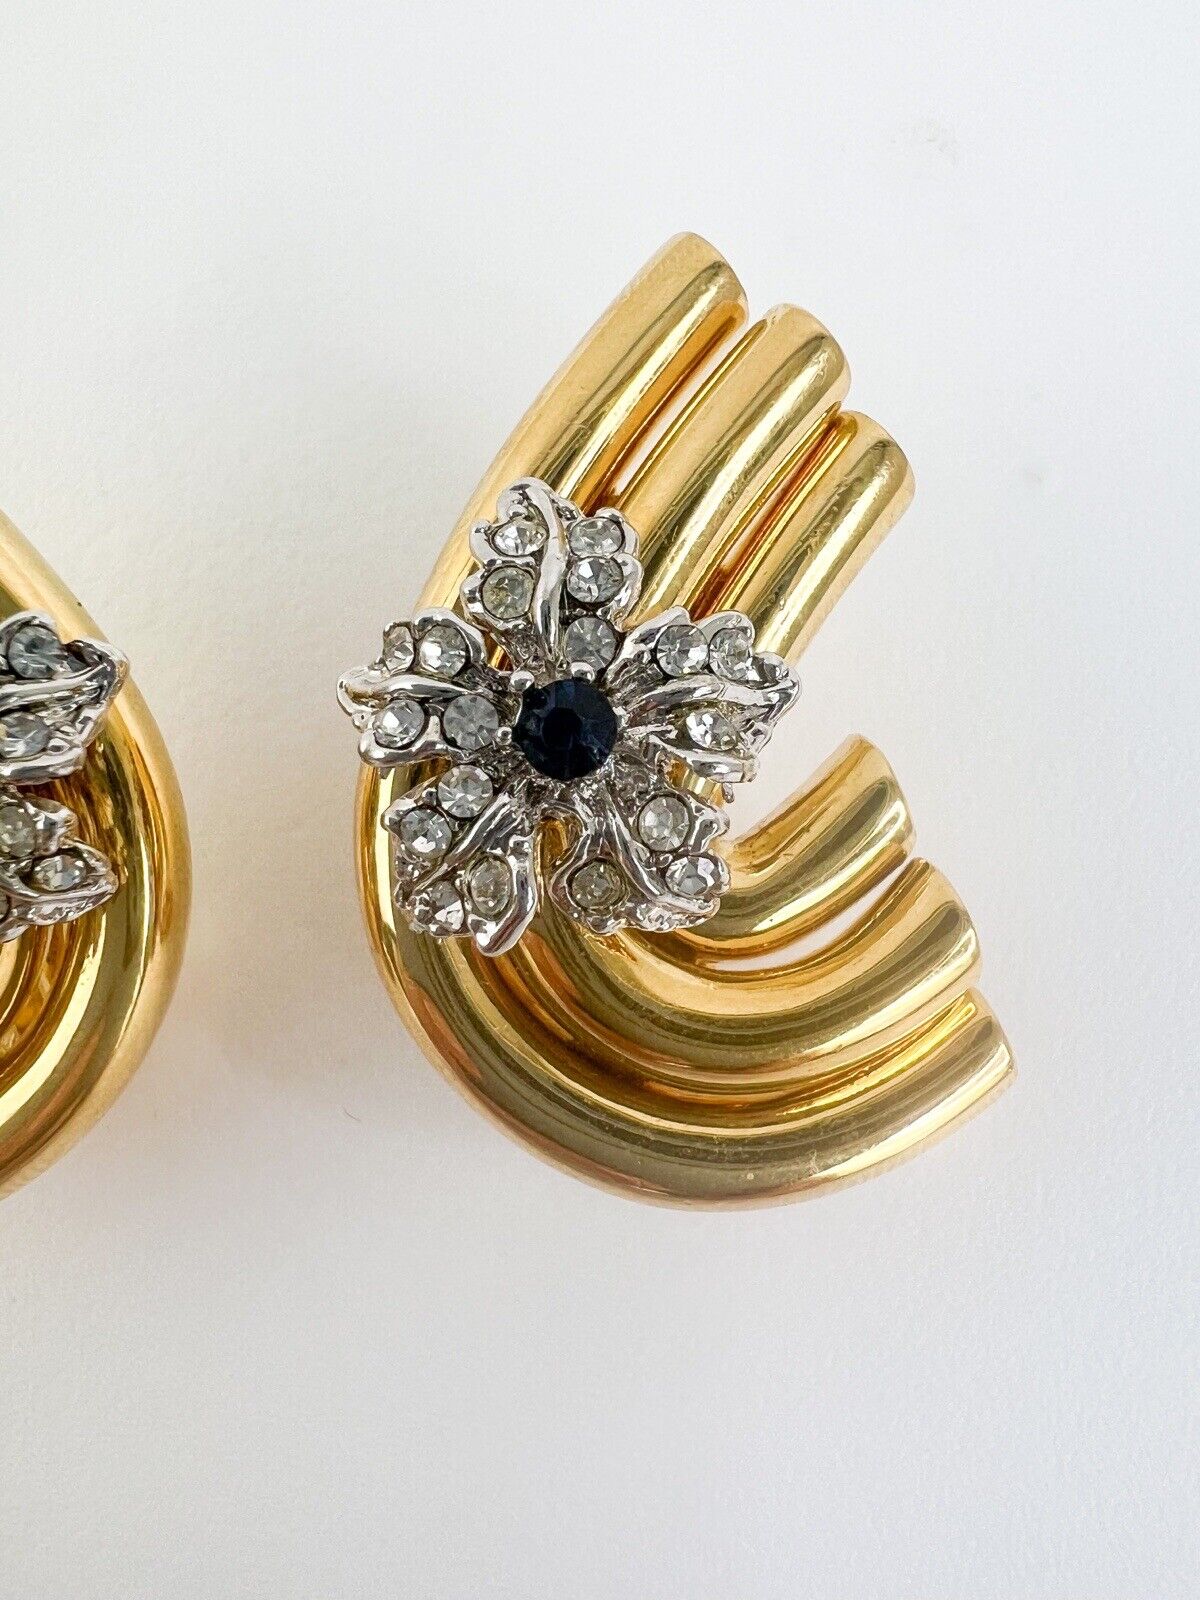 BALMAIN  Earrings Vintage, Daisy Flower Earrings, Modern Bridal Pearl, Gift for her Jewelry for Women, Personalized Gifts, Wedding Jewelry